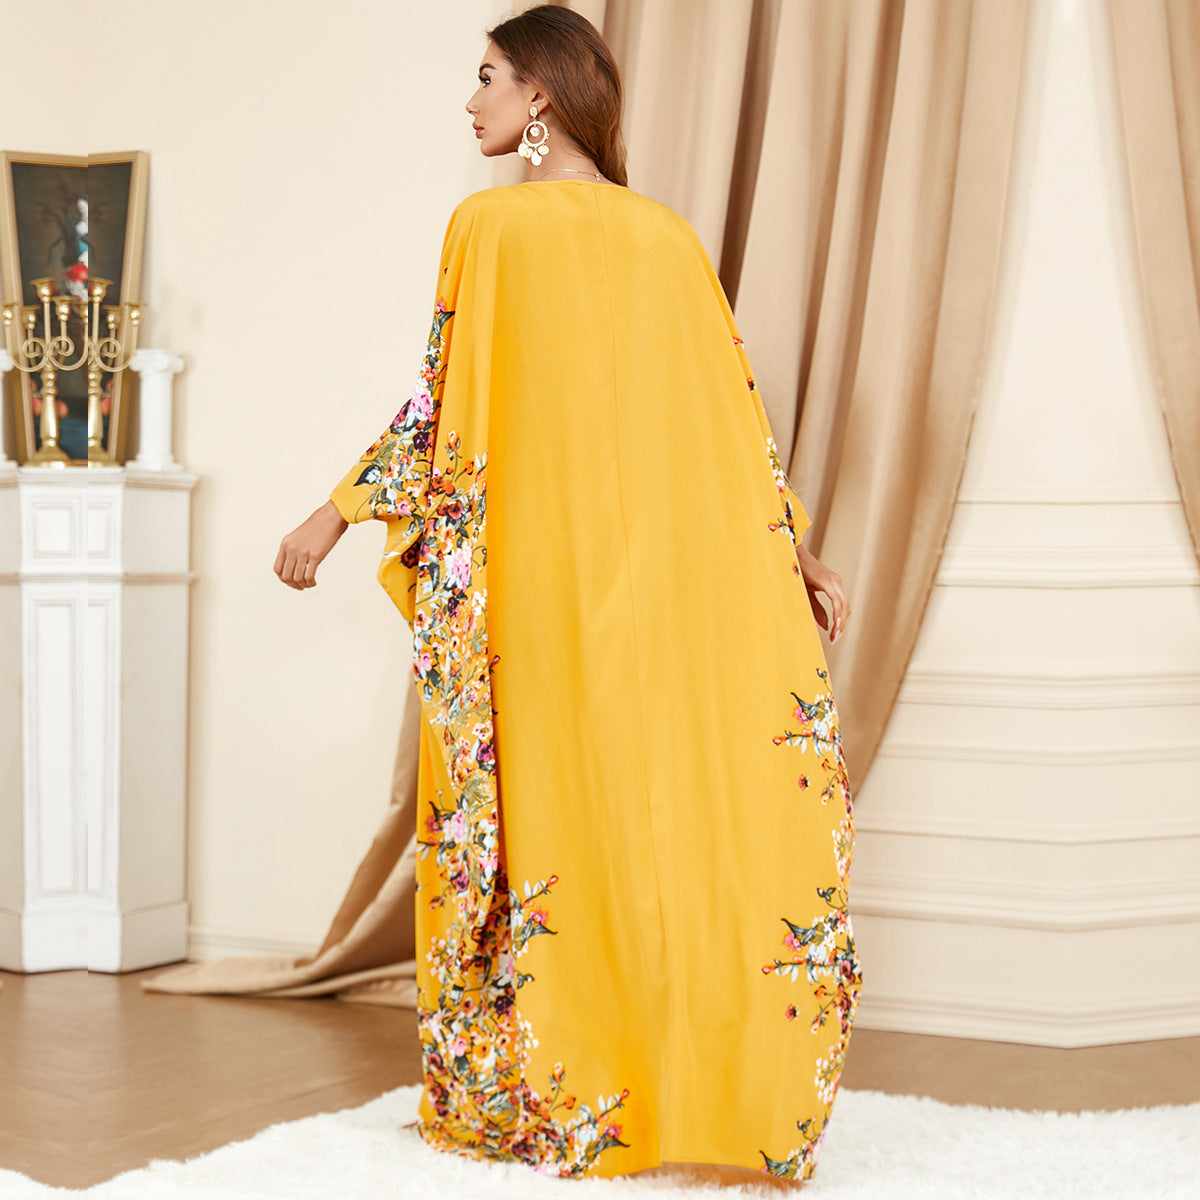 Yellow Bat Sleeve Loose Fashion Plus size Dress